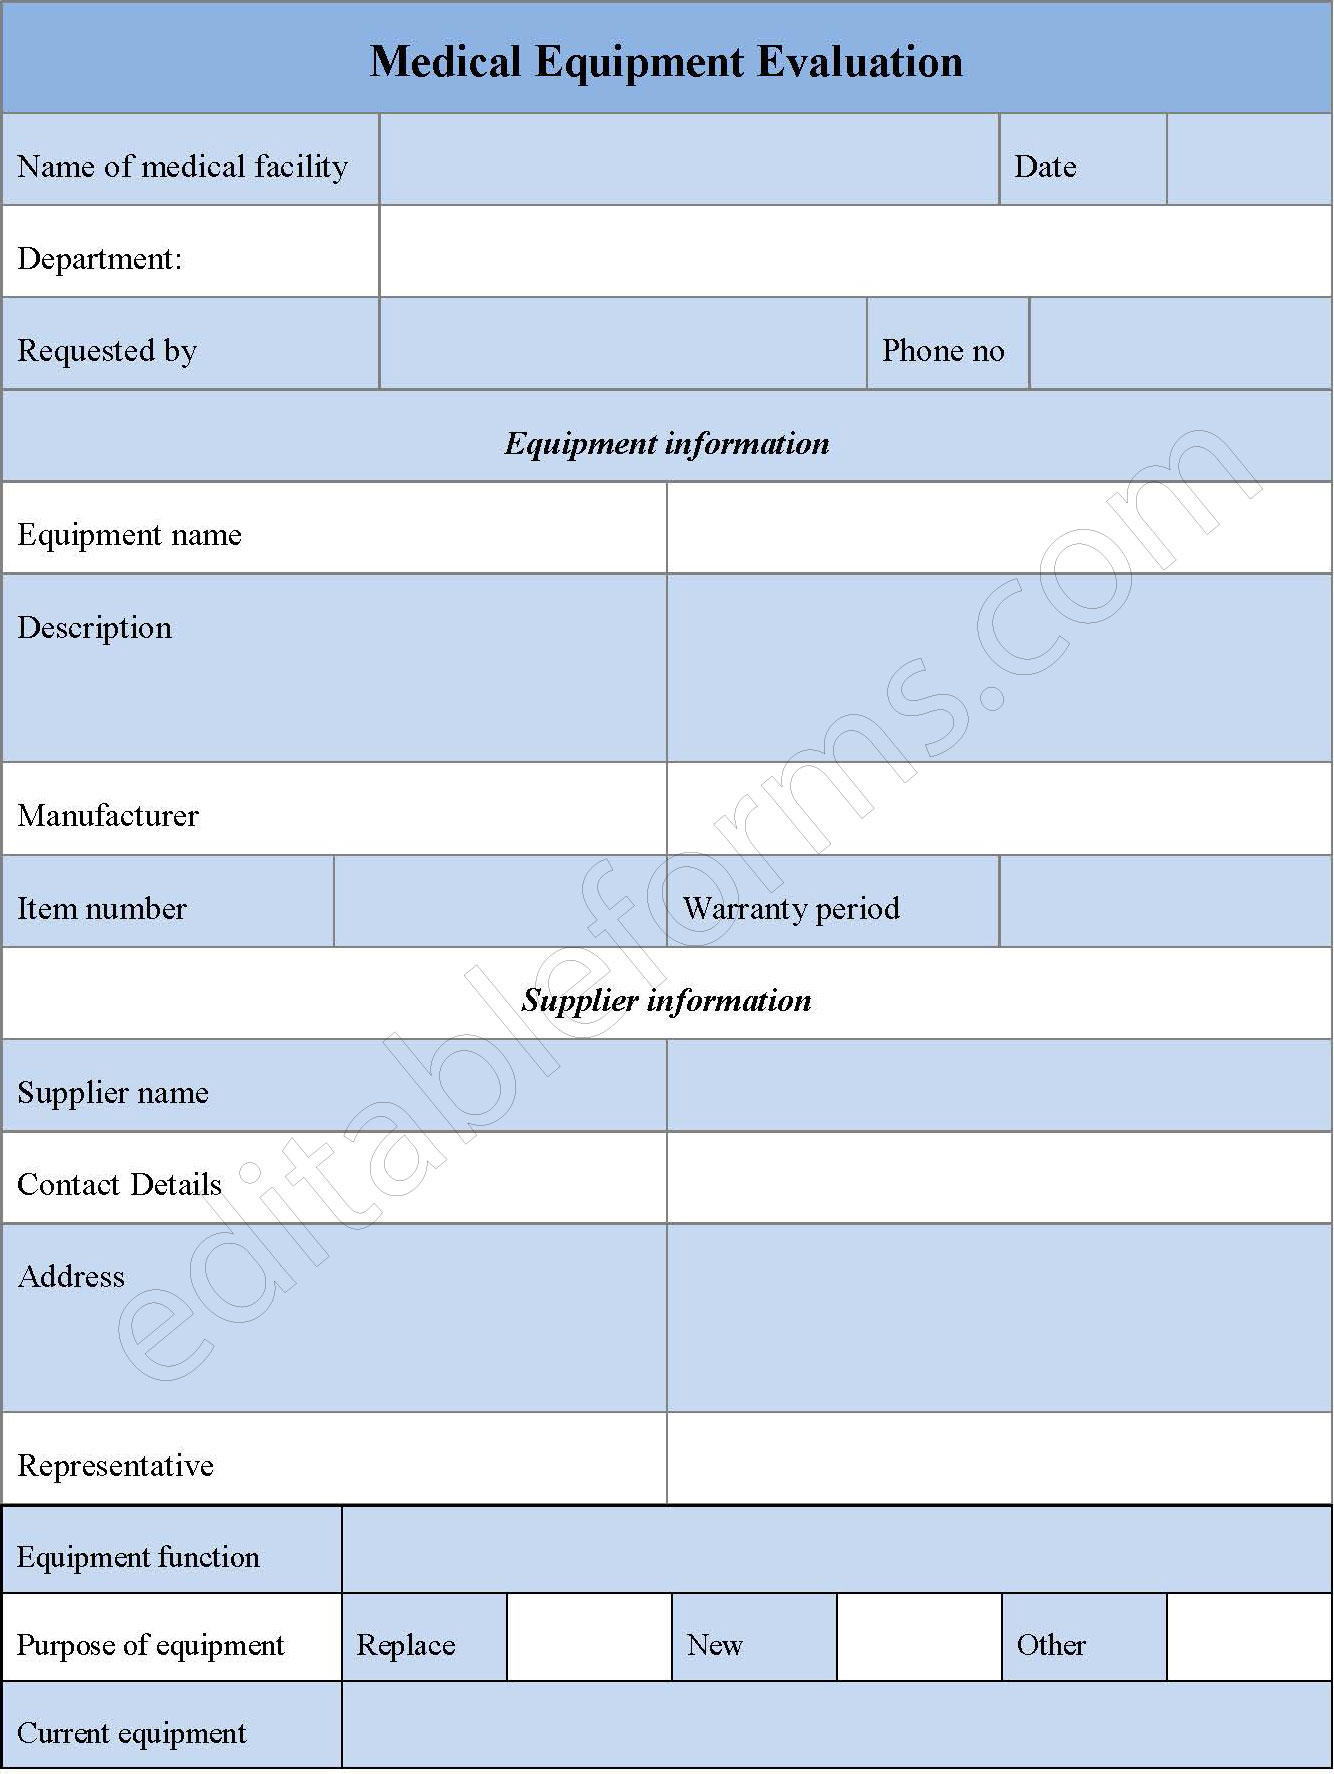 Medical Equipment Evaluation Form